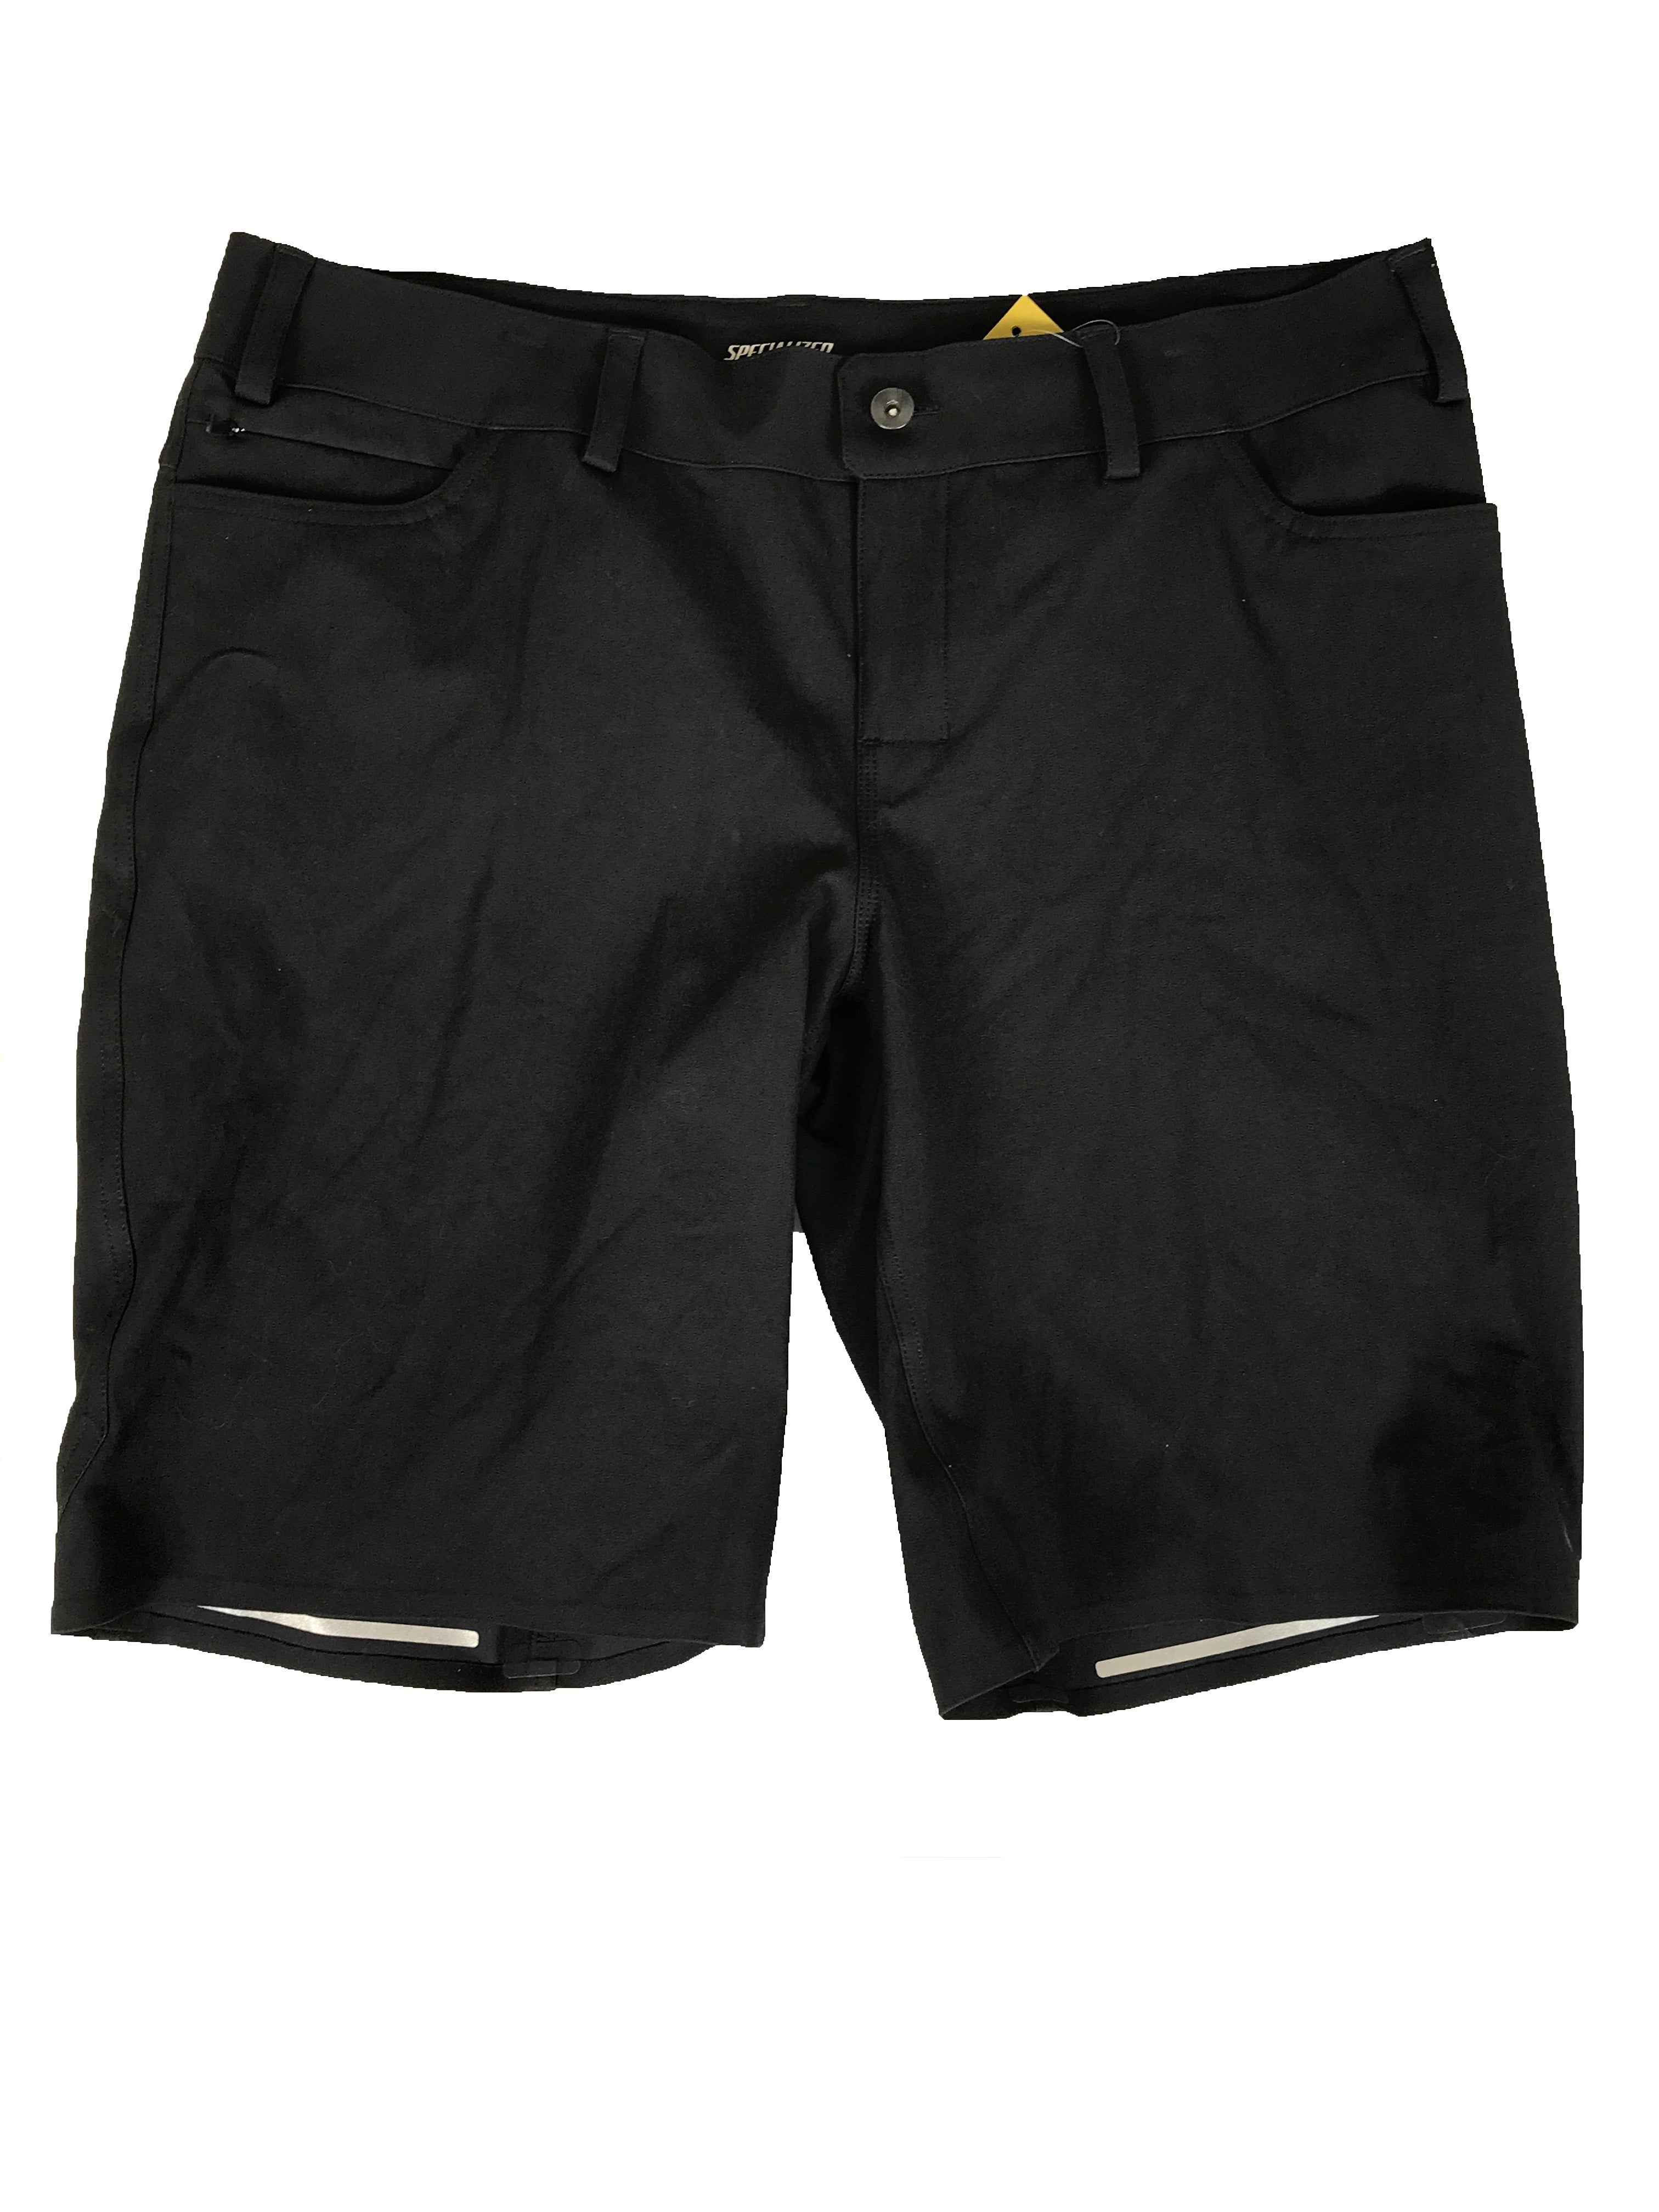 Specialized RBX ADV Black Shorts Men's Size 42 NWT